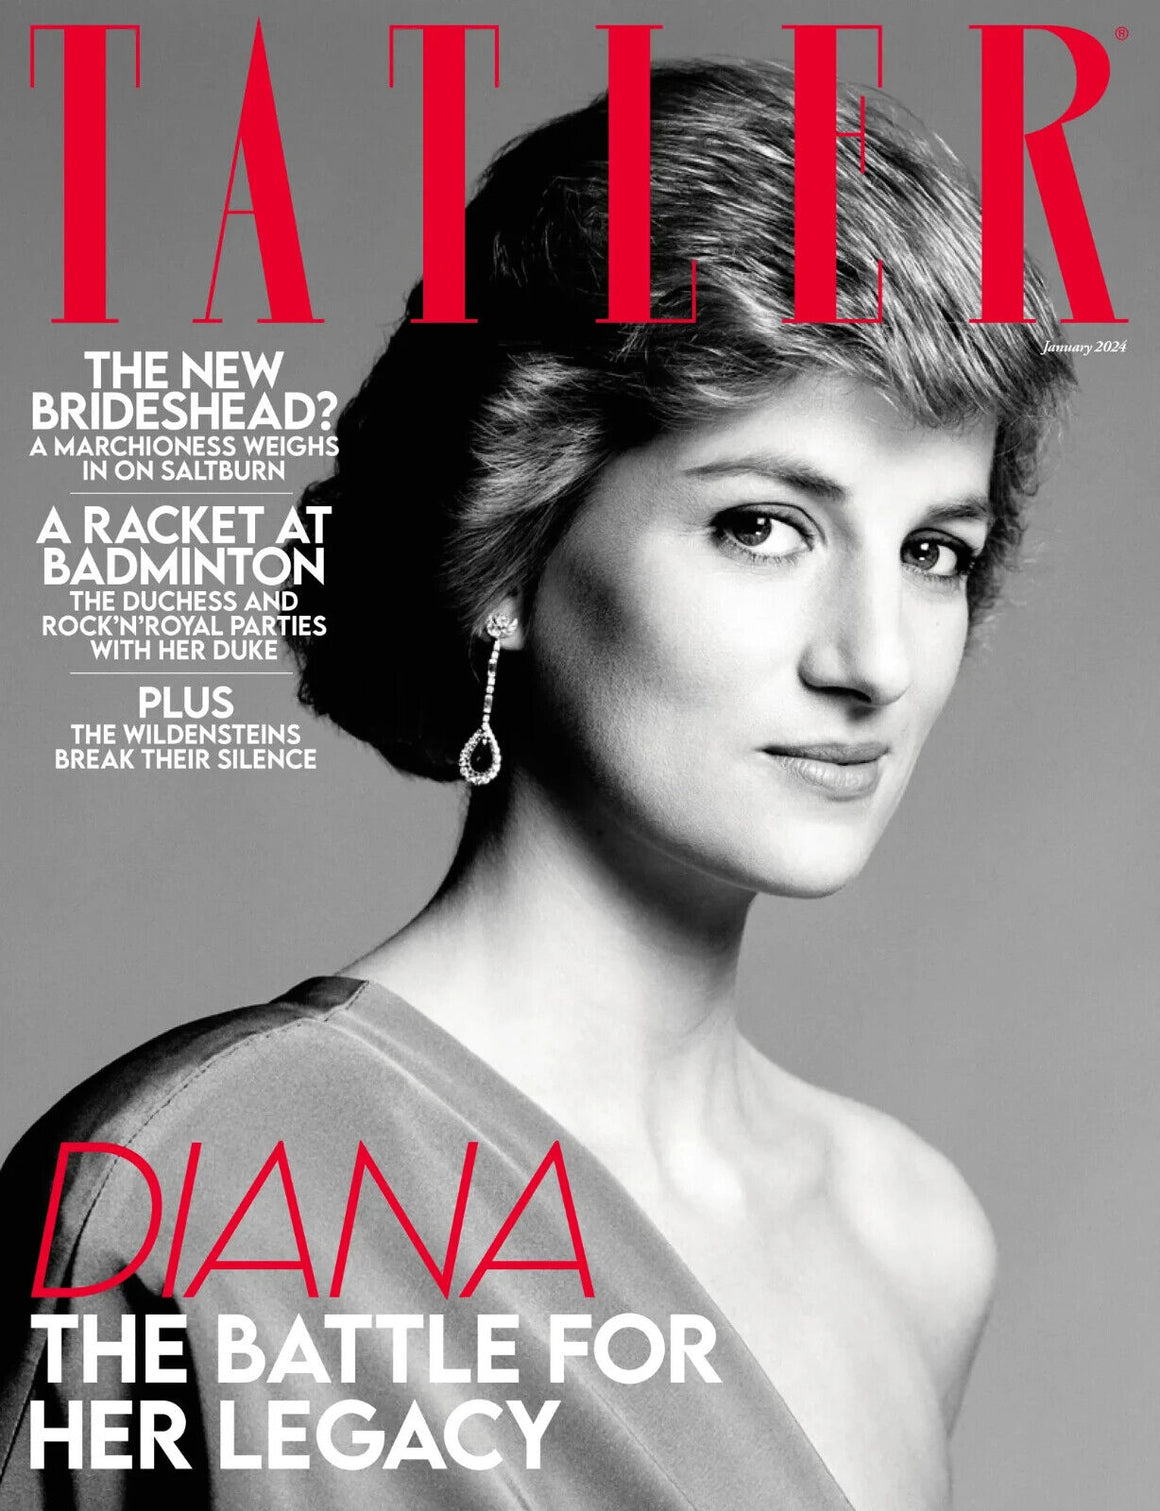 Tatler UK Magazine January 2024 - Princess Diana - The Battle For Her Legacy